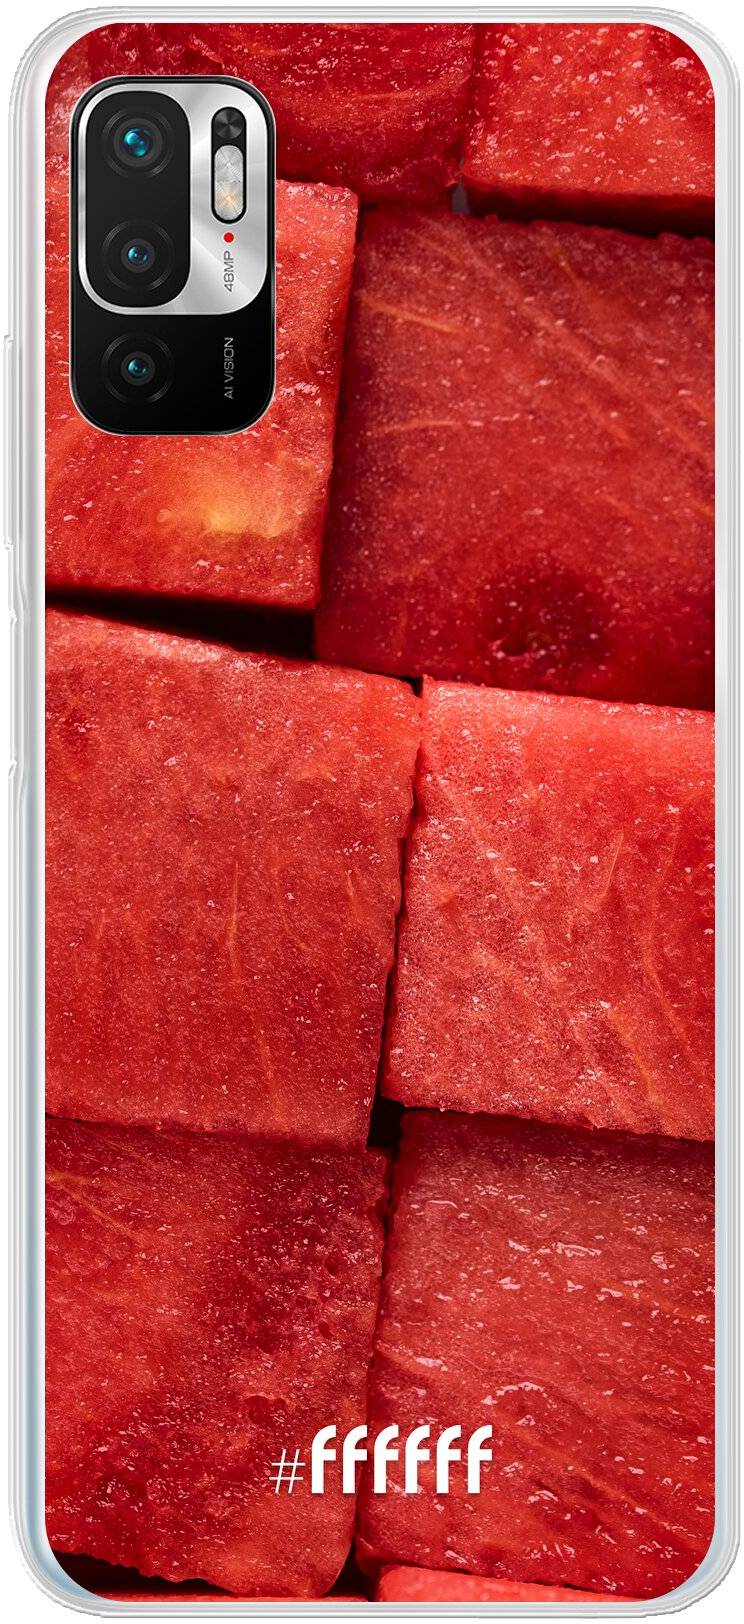 Sweet Melon Redmi Note 10 5G